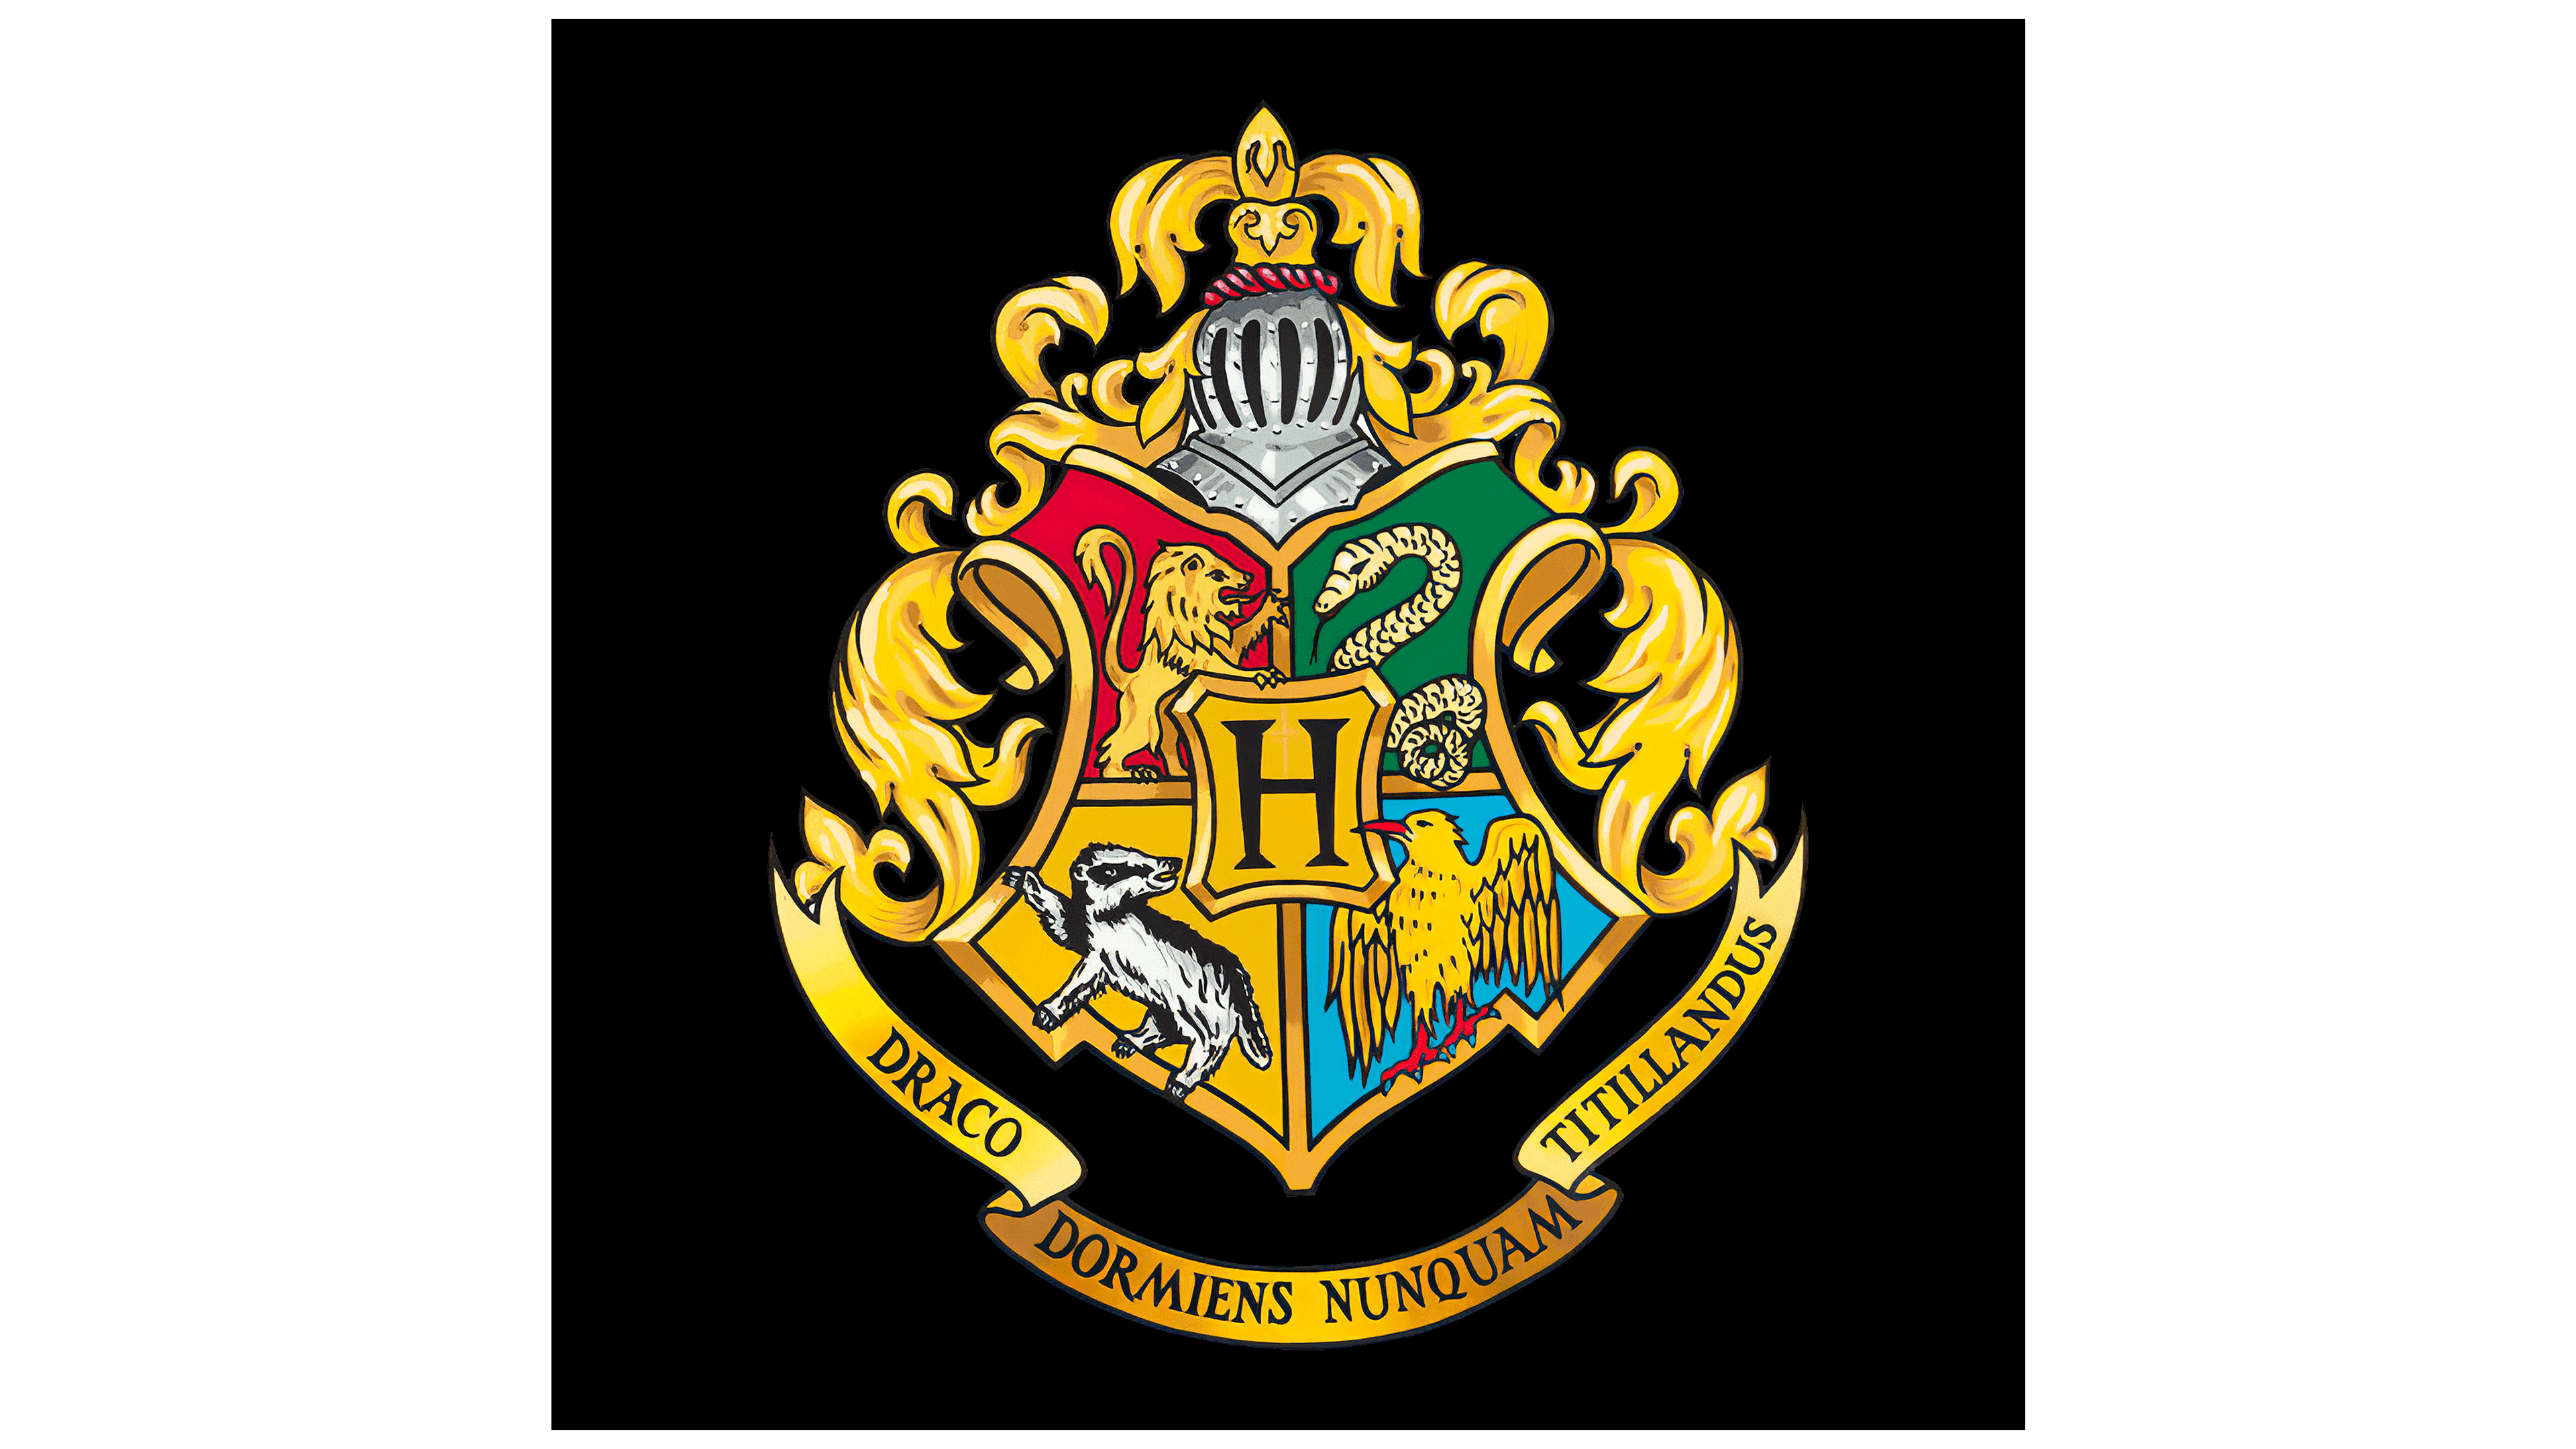 Hogwarts Symbol